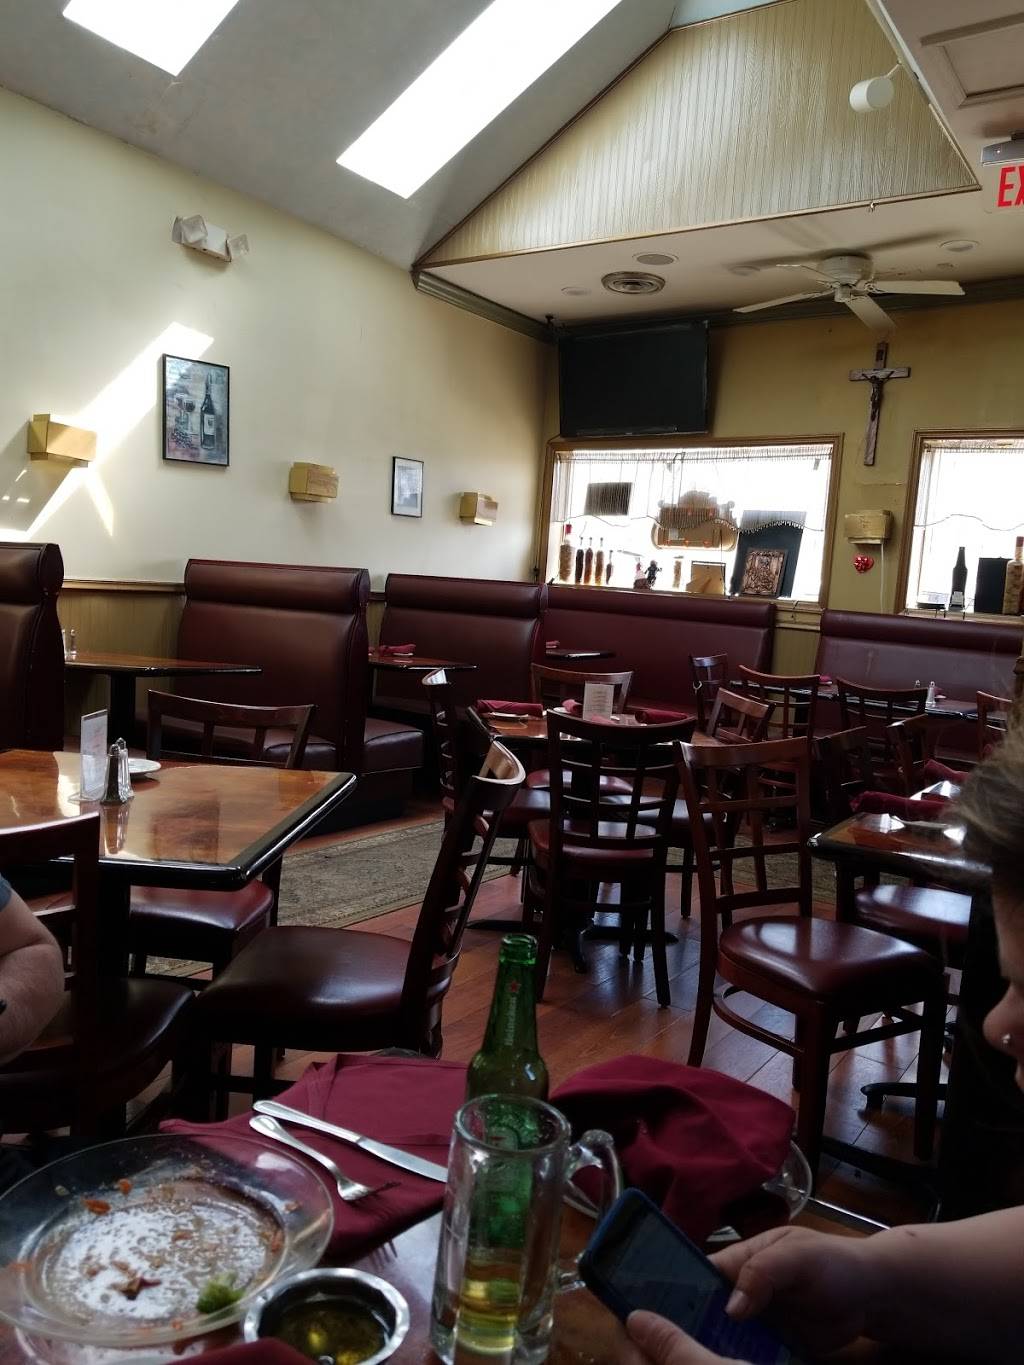 Luigis Restaurant | 54 Mt Vernon St, Ridgefield Park, NJ 07660, USA | Phone: (201) 641-9869